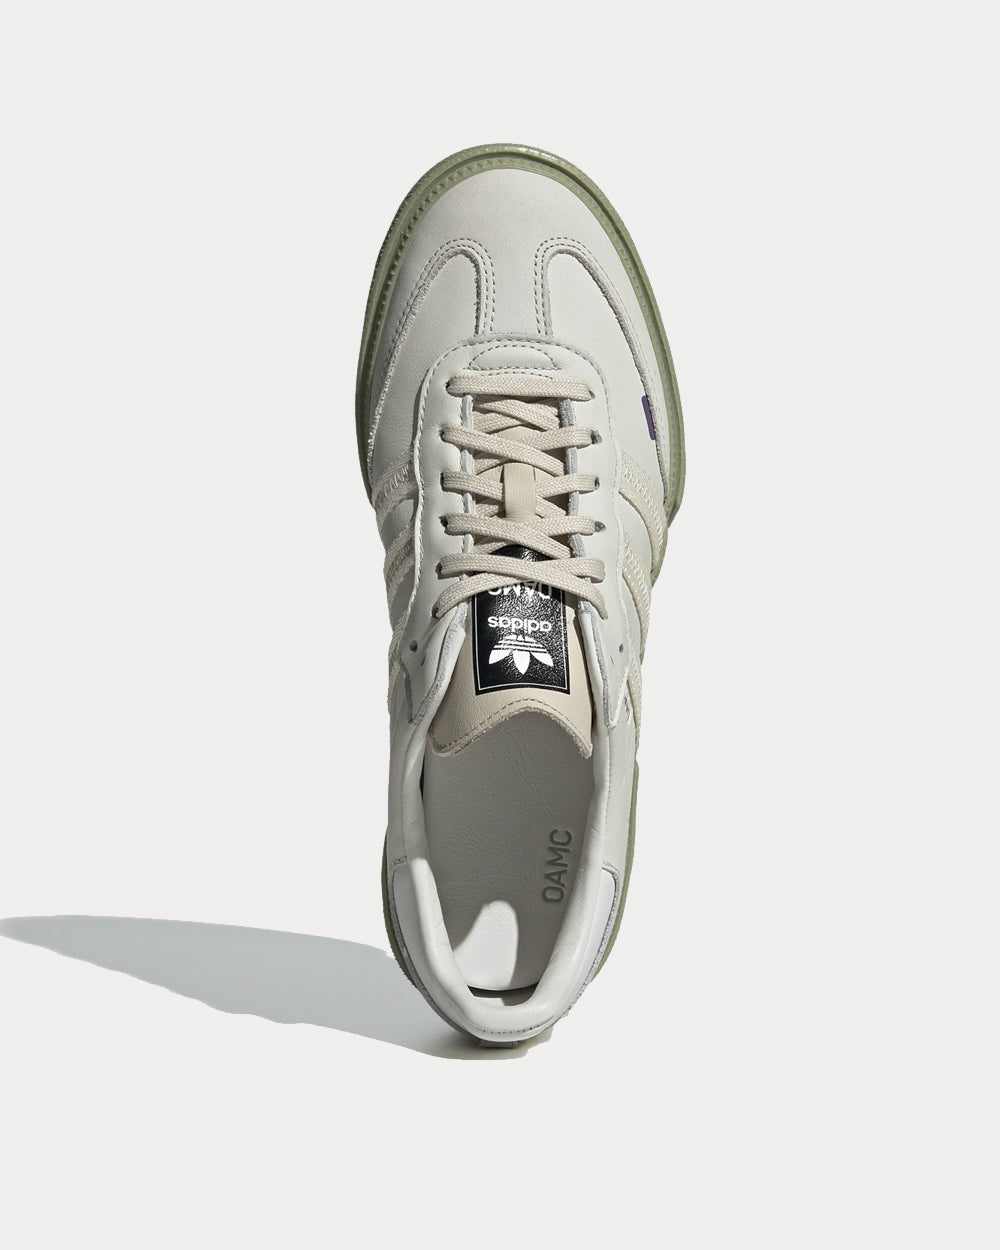 Adidas x OAMC Type O-8 Orbit Grey / Cream White / Bliss Low Top 